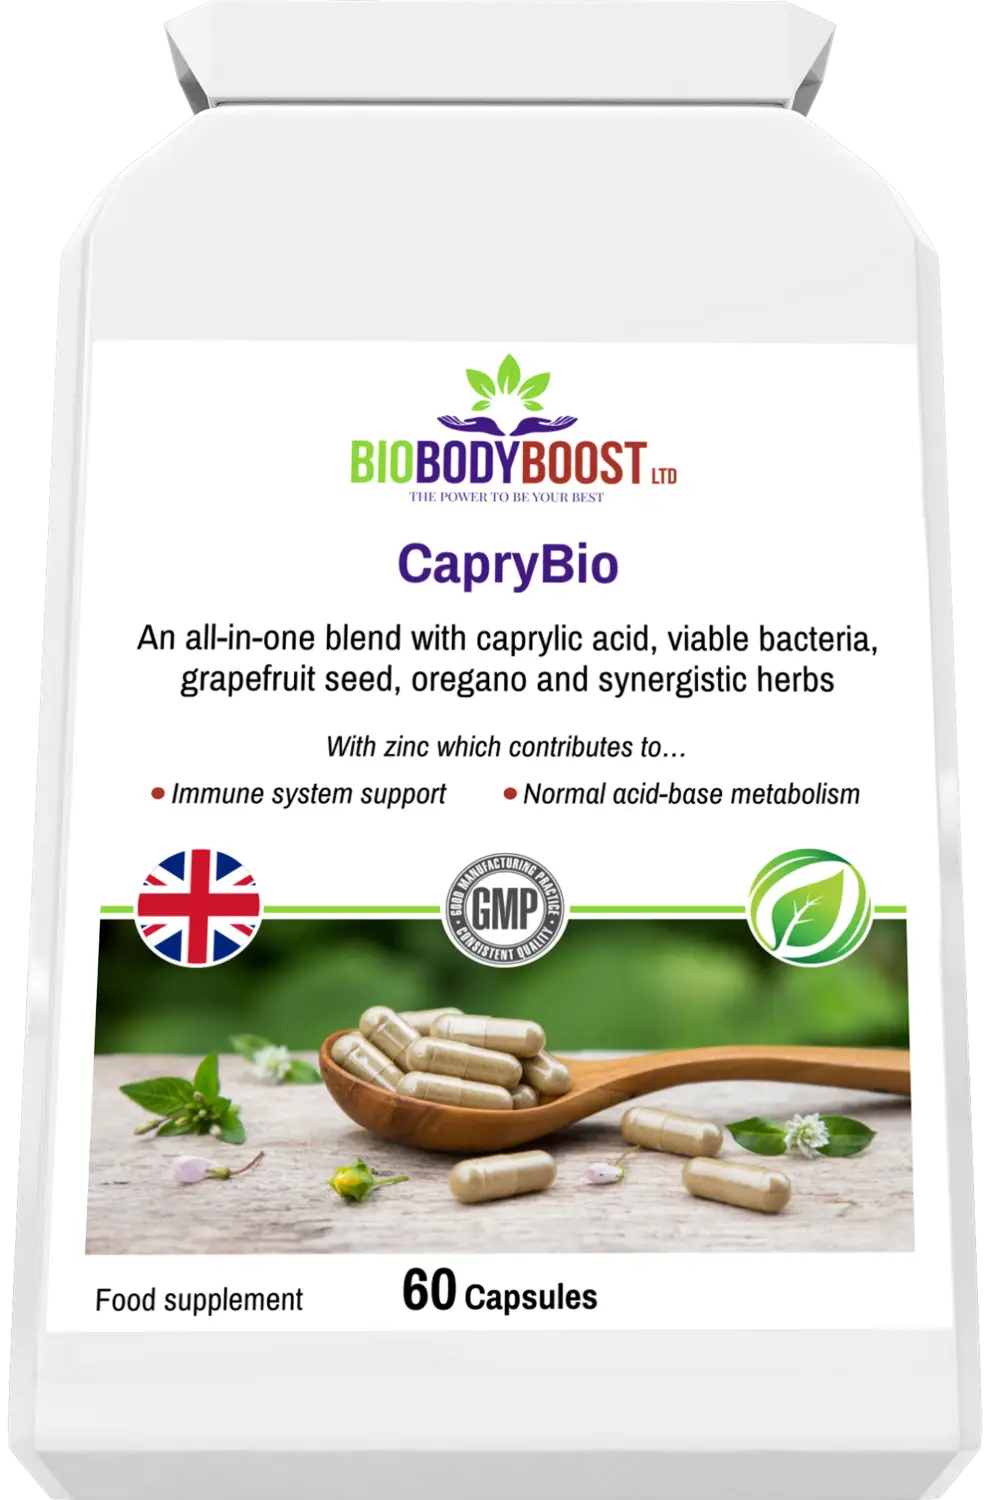 Caprybio gastrointestinal complex - vitamins & supplements